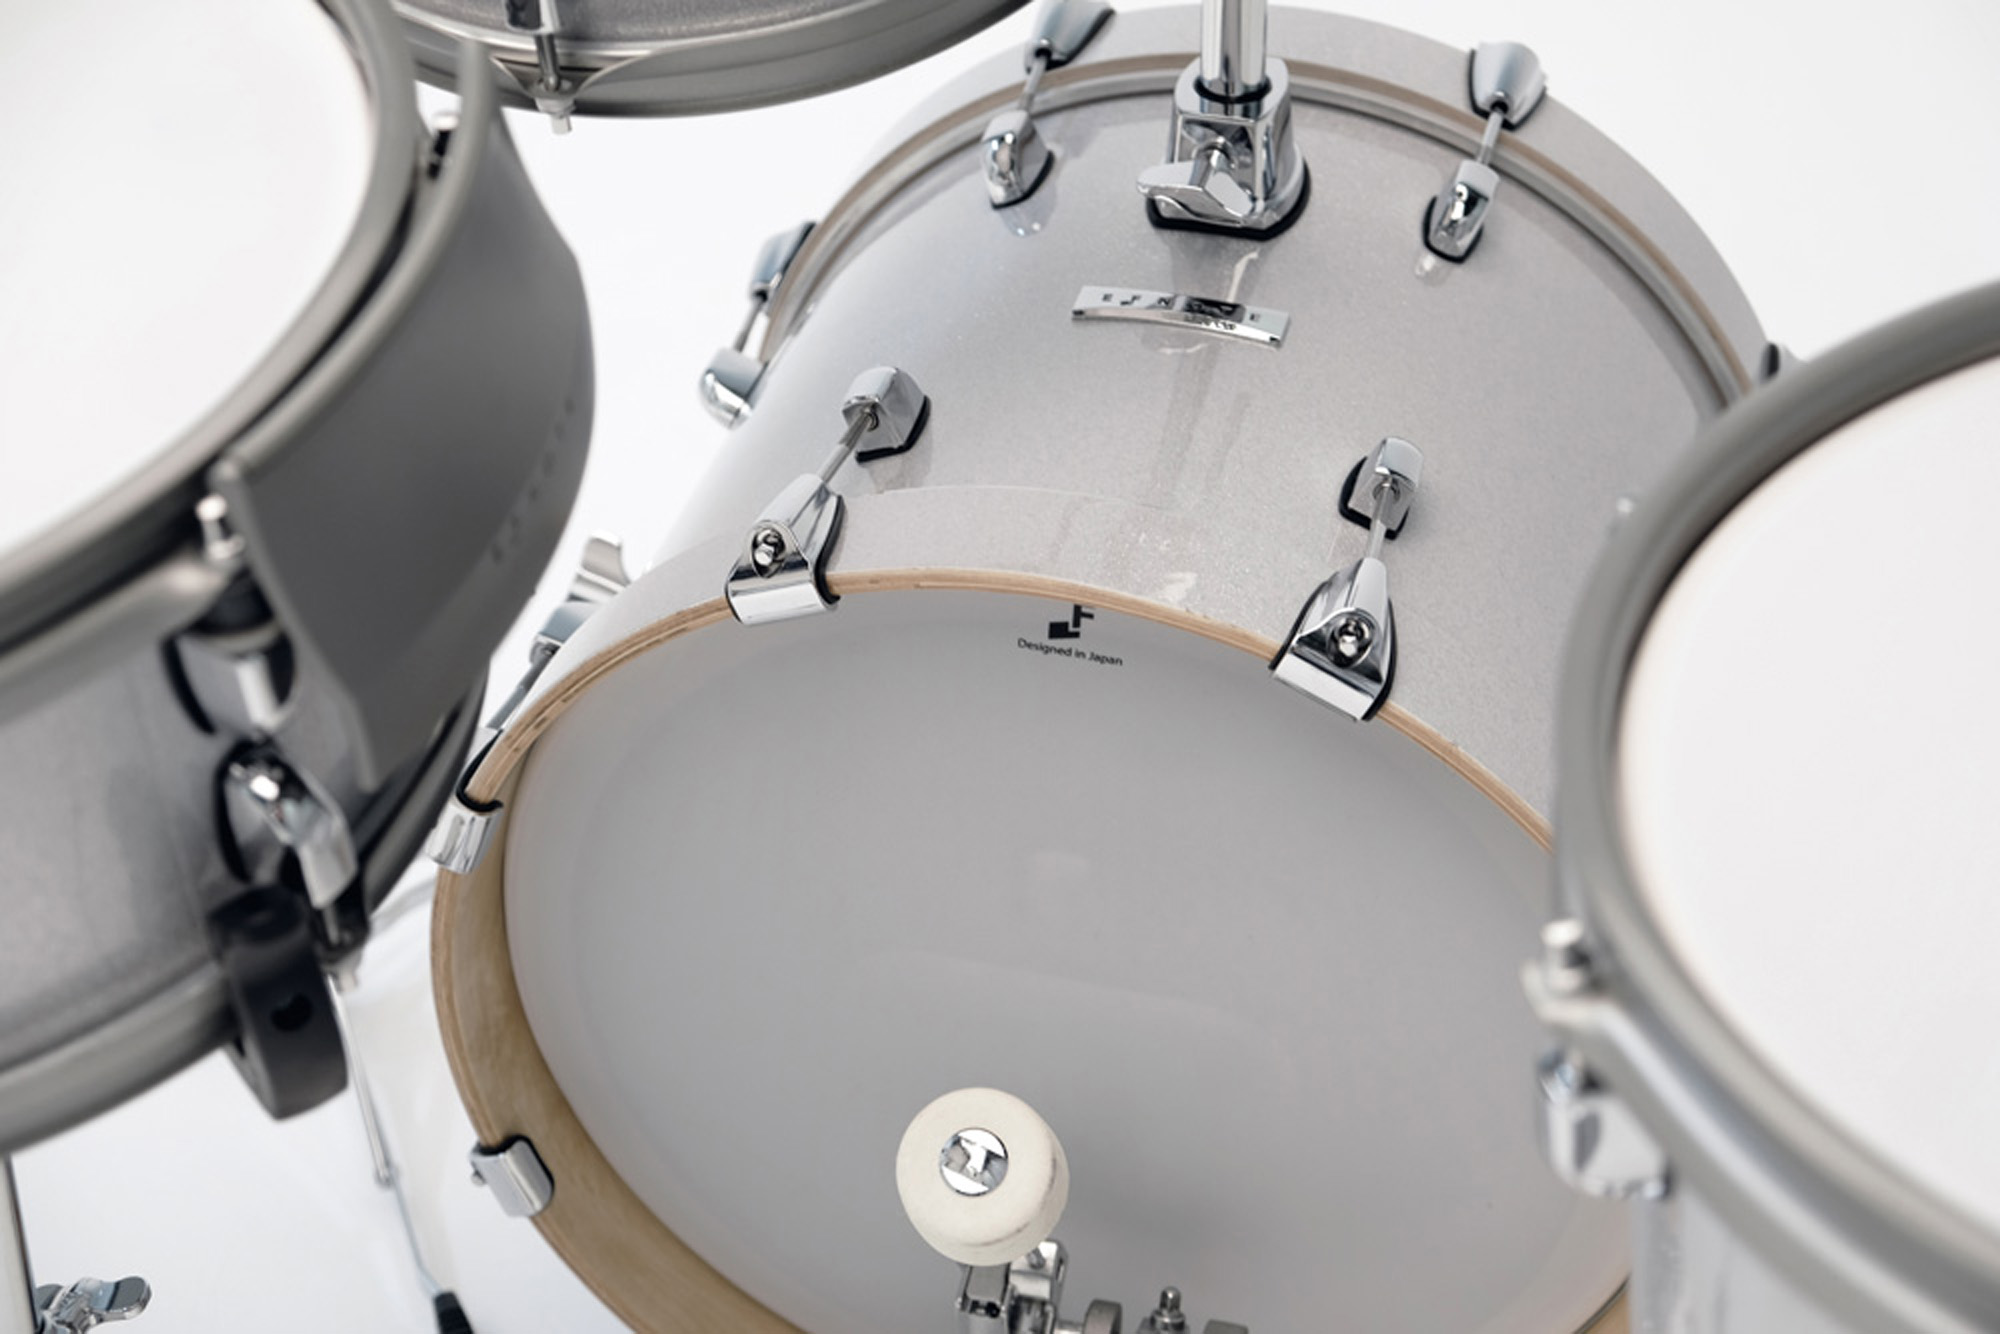 Efnote Efd5 Drum Kit - Komplett E-Drum Set - Variation 4